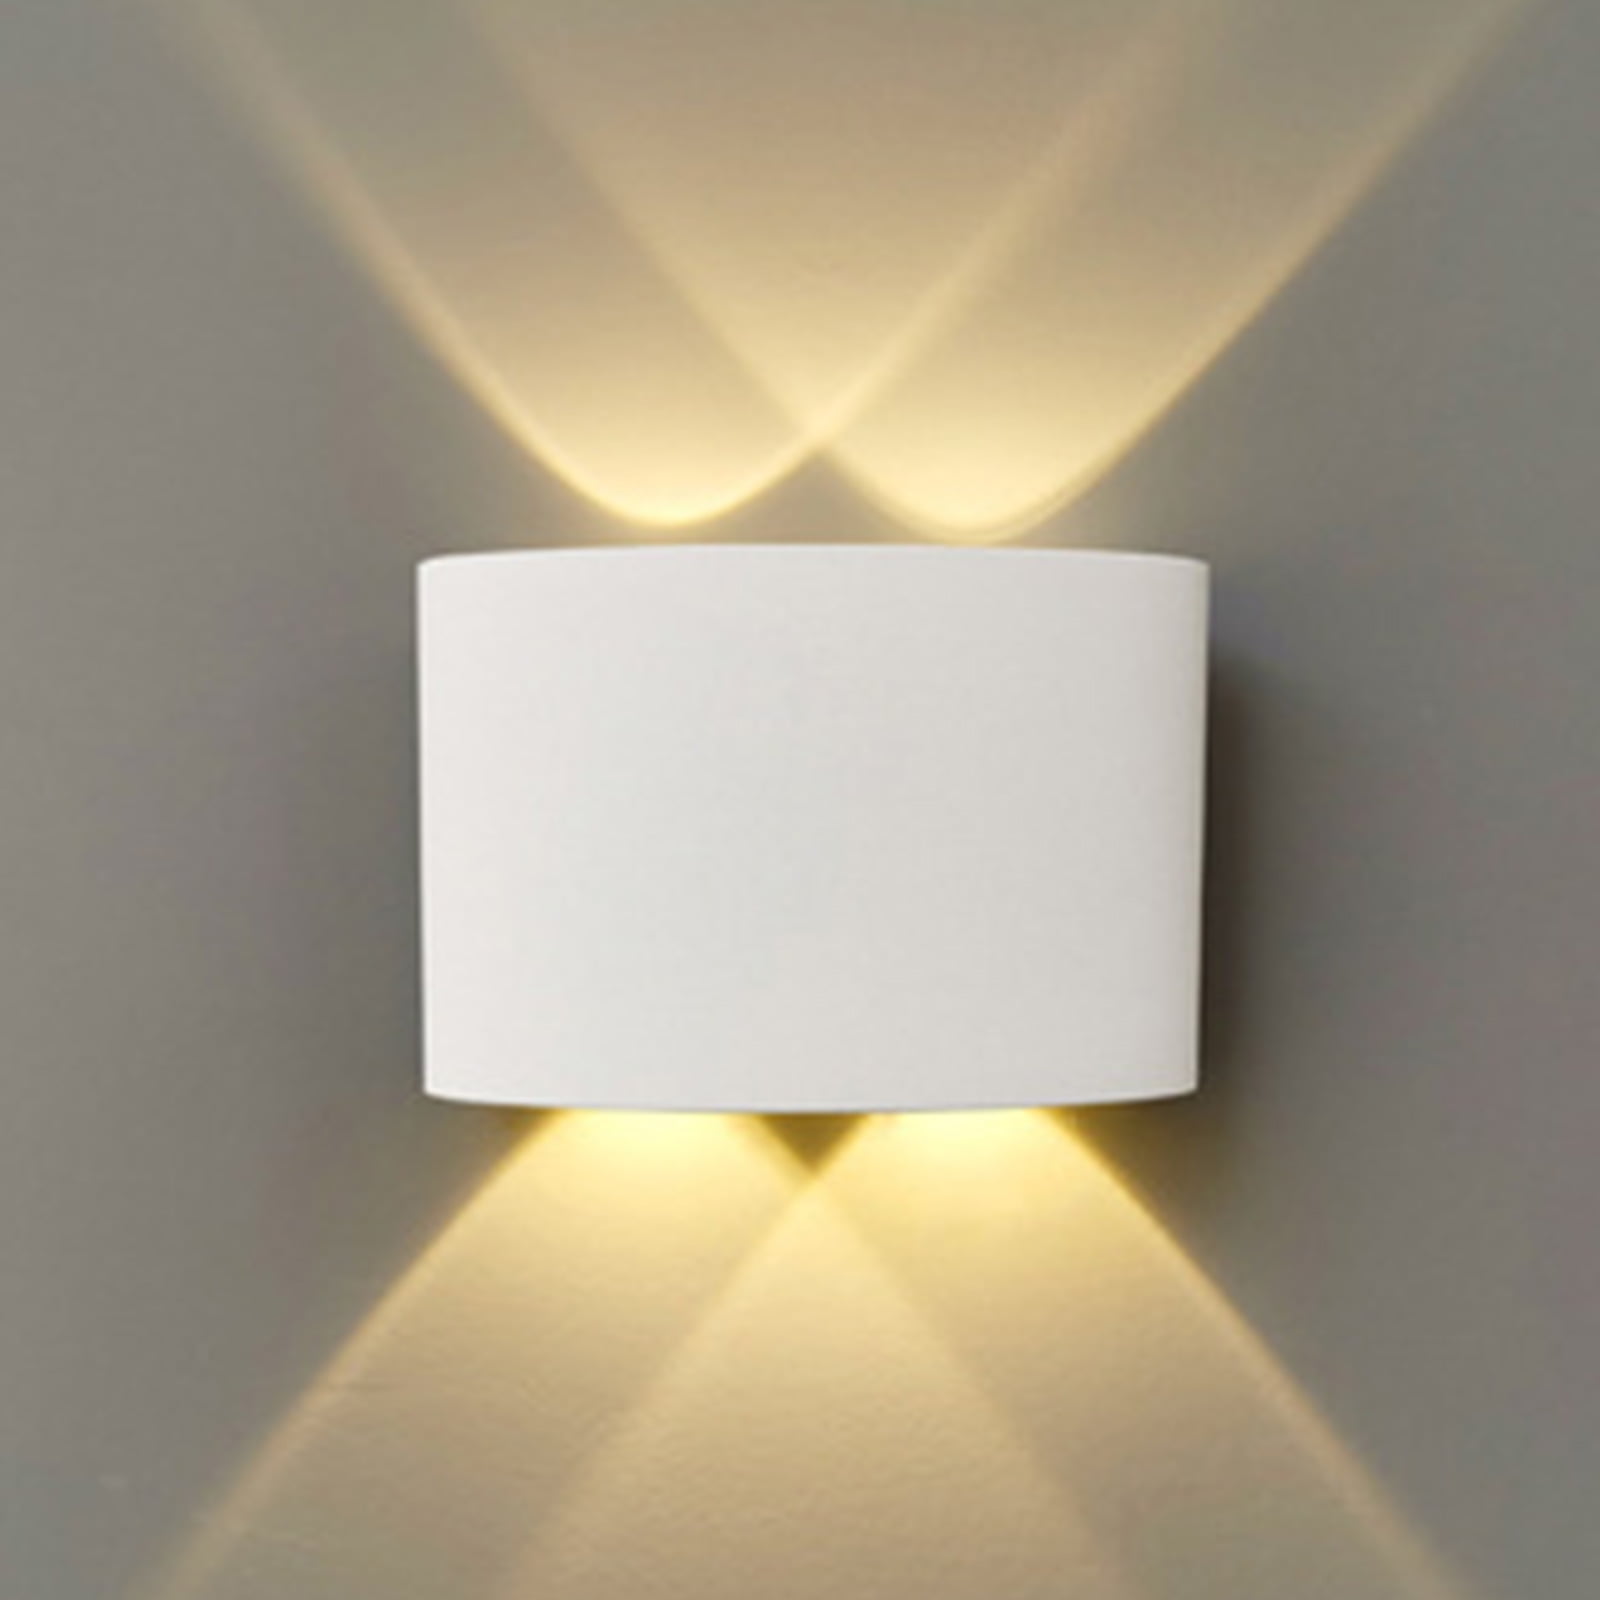 Wall Light For Bedroom Home Lighting LED Wall Lamp Home Lighting  Fixture Tools 